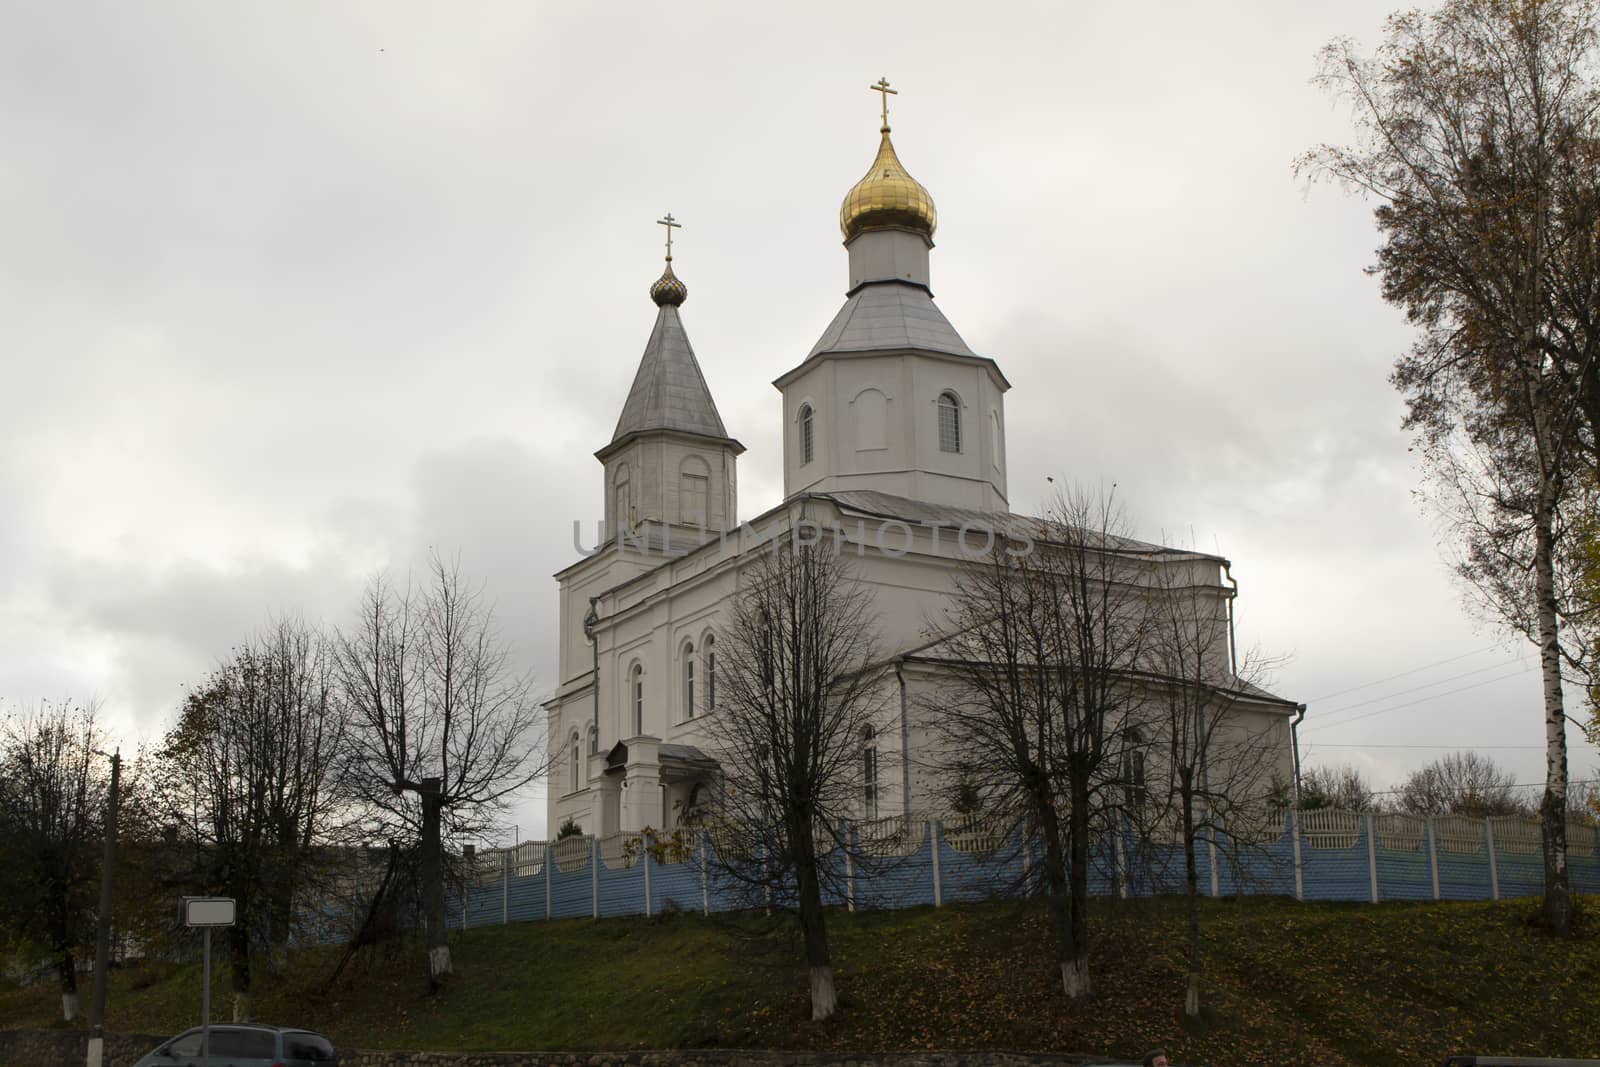 Old white St. Nicholas ortodox Church in Logoisk, Belarus